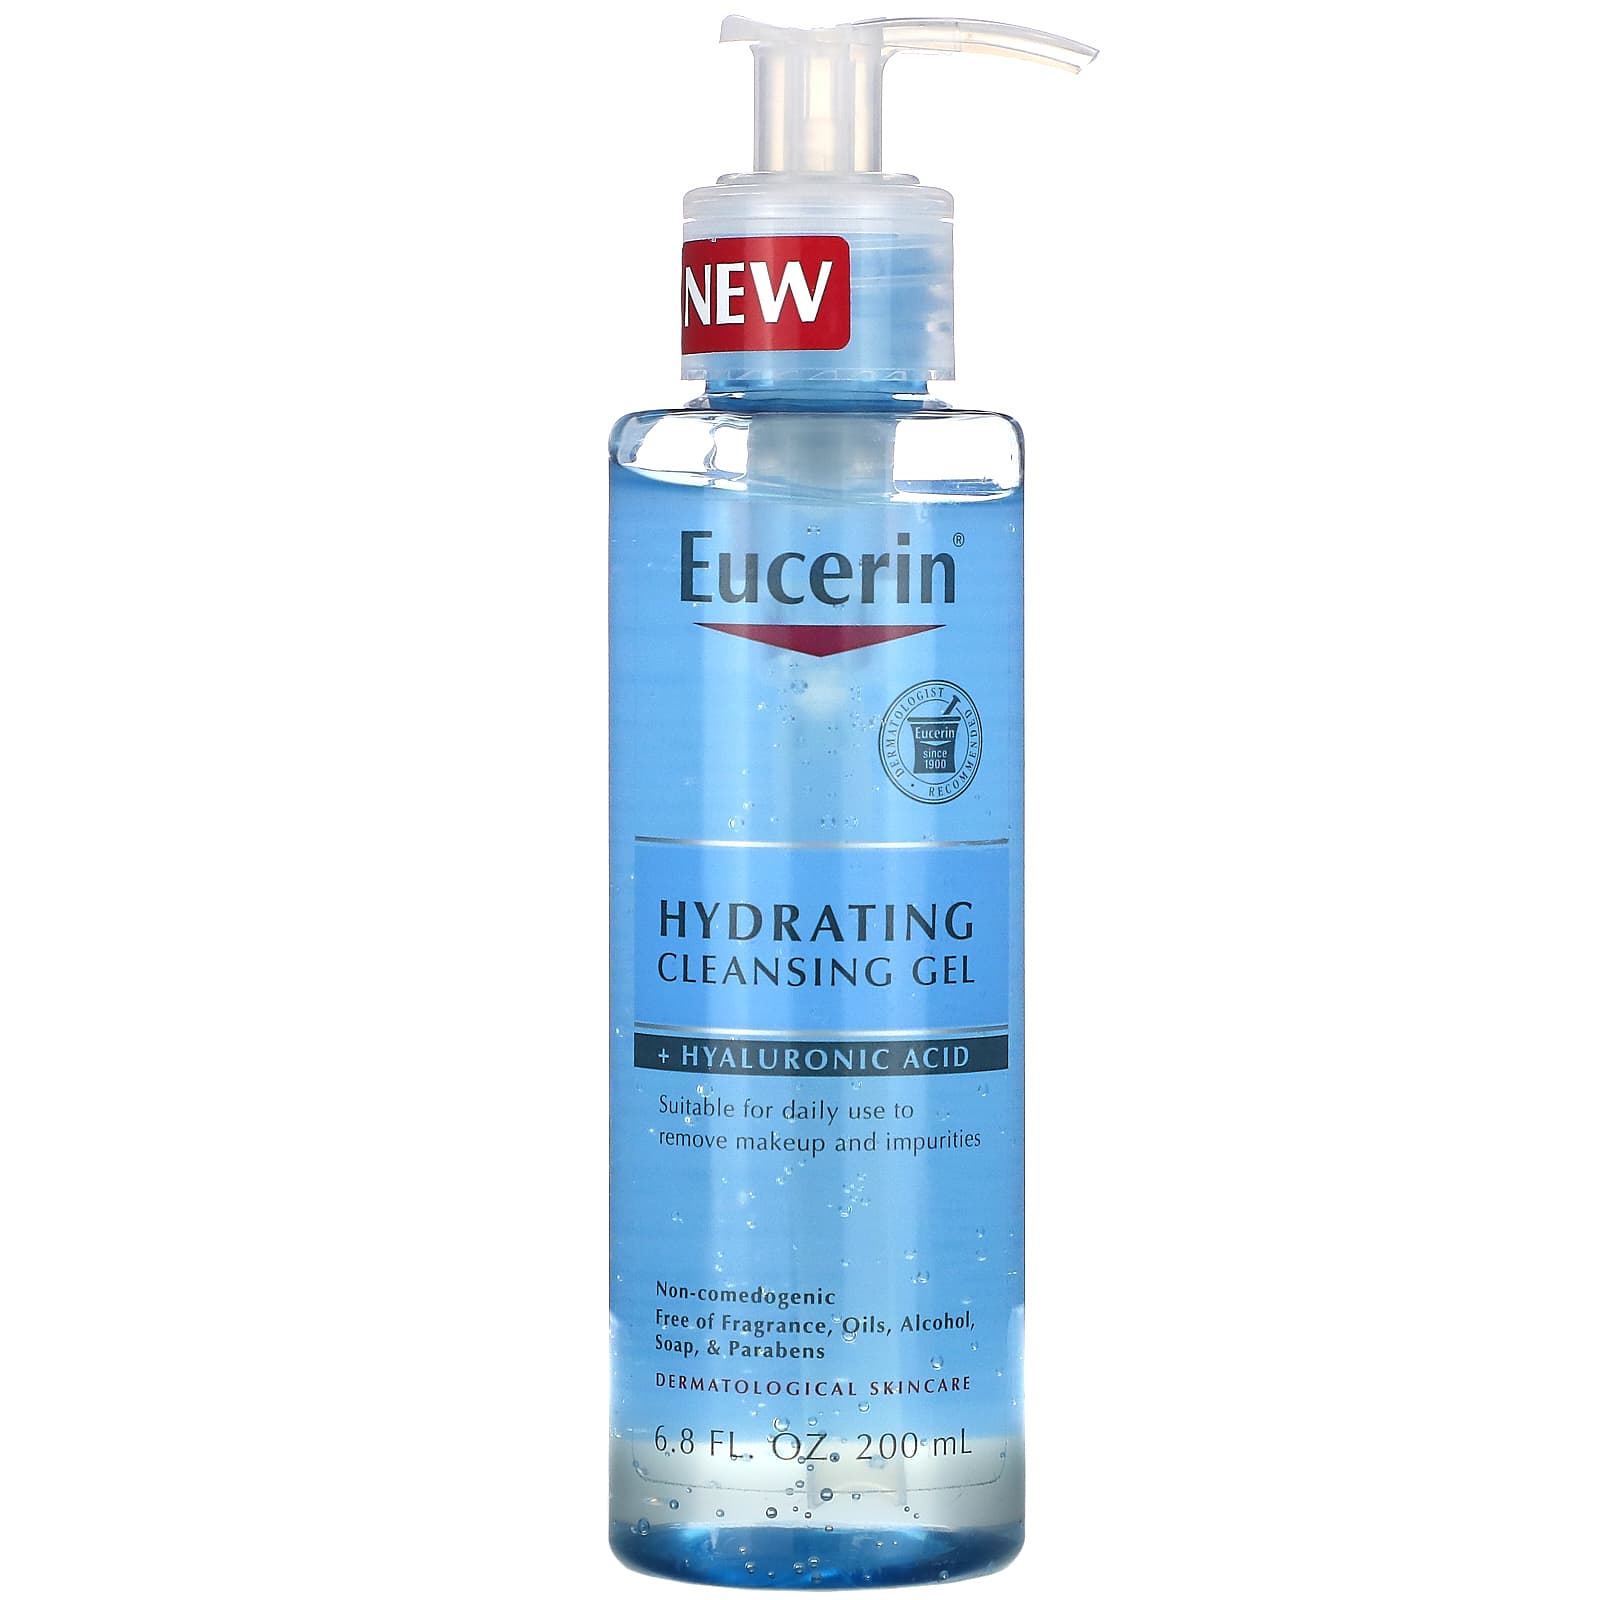 Eucerin hydrating cleansing gel + Hyaluronic Acid - 200 ml